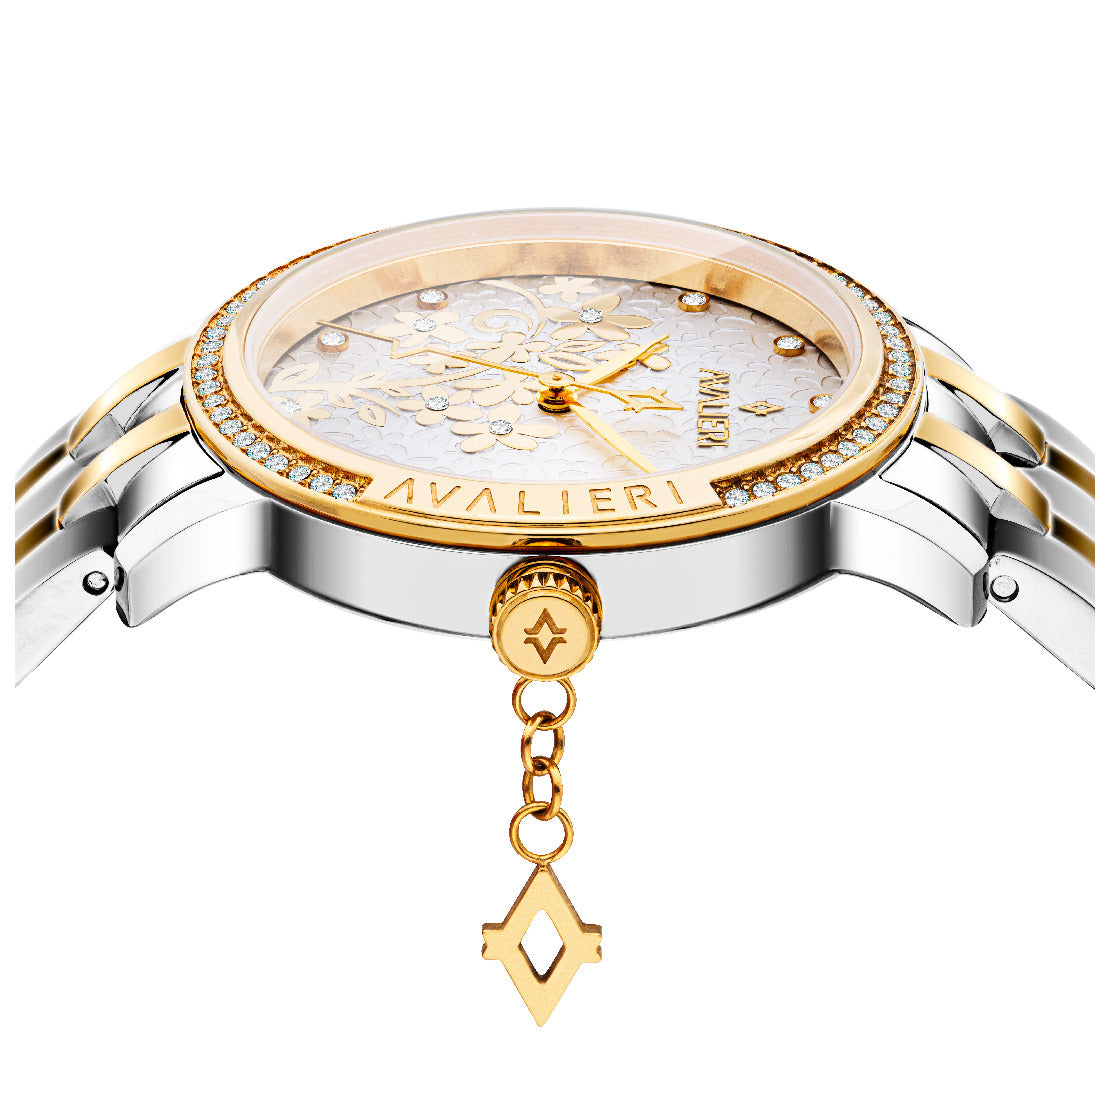 Avalieri Women's Quartz Watch With Silver White Dial - AV-2454B